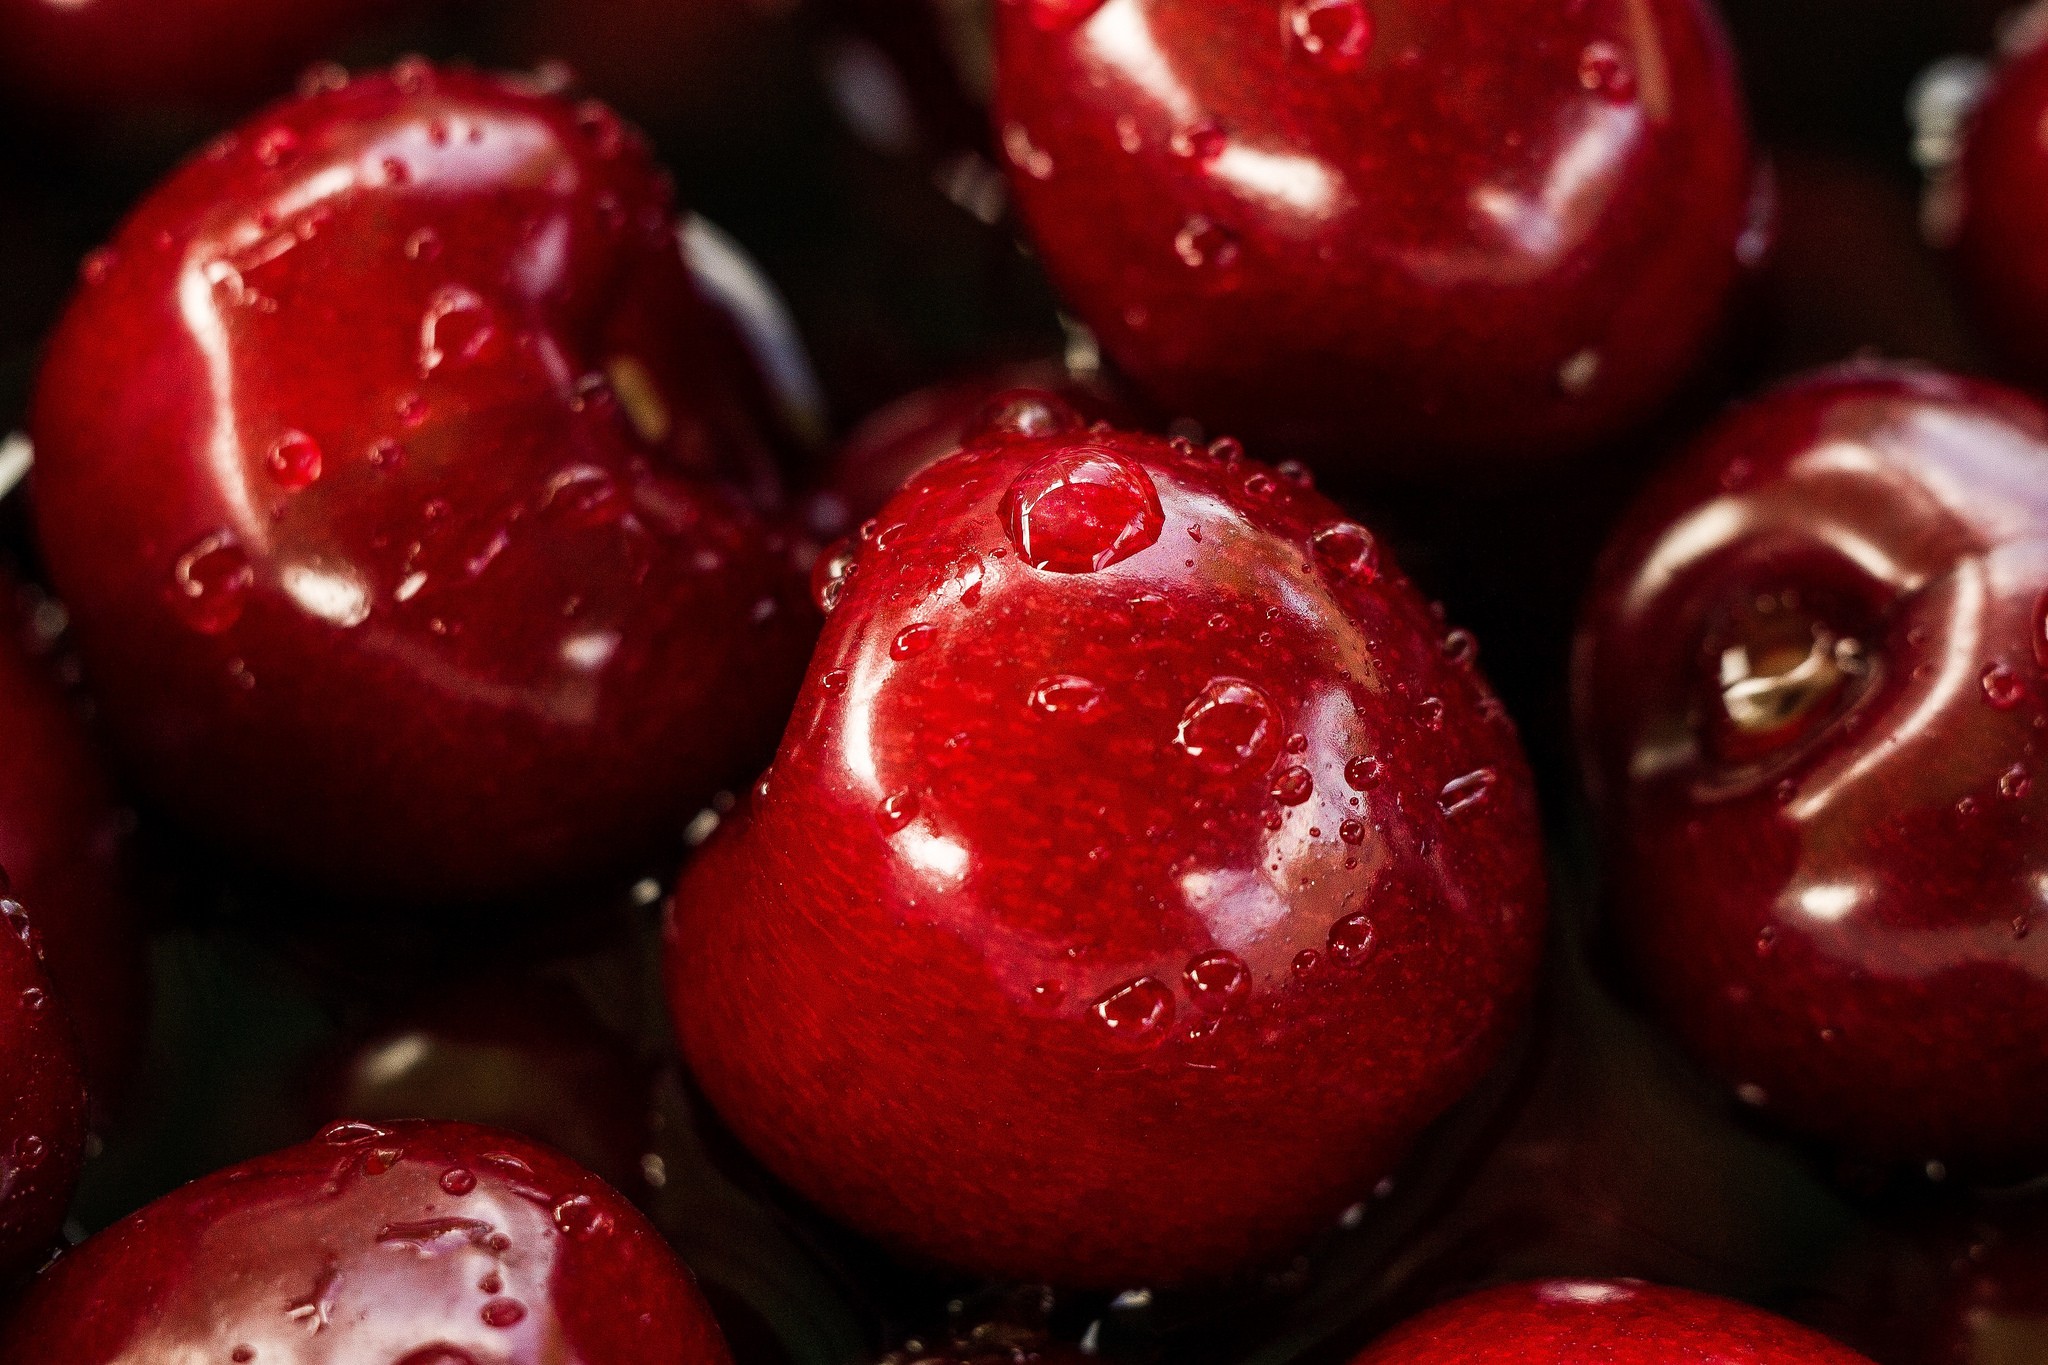 General 2048x1365 fruit water drops red cherries macro